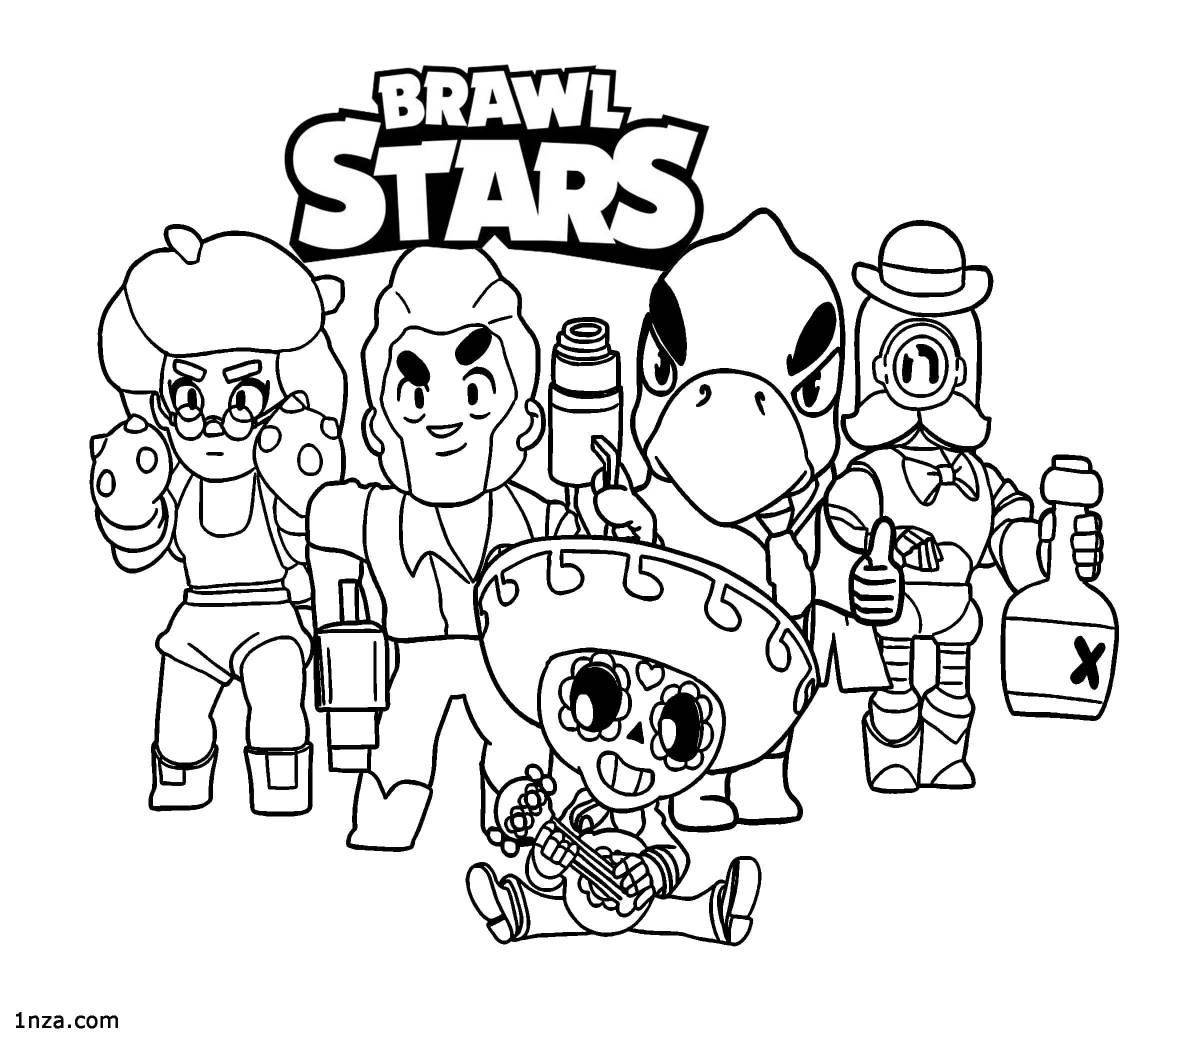 Bravel stars leon #6